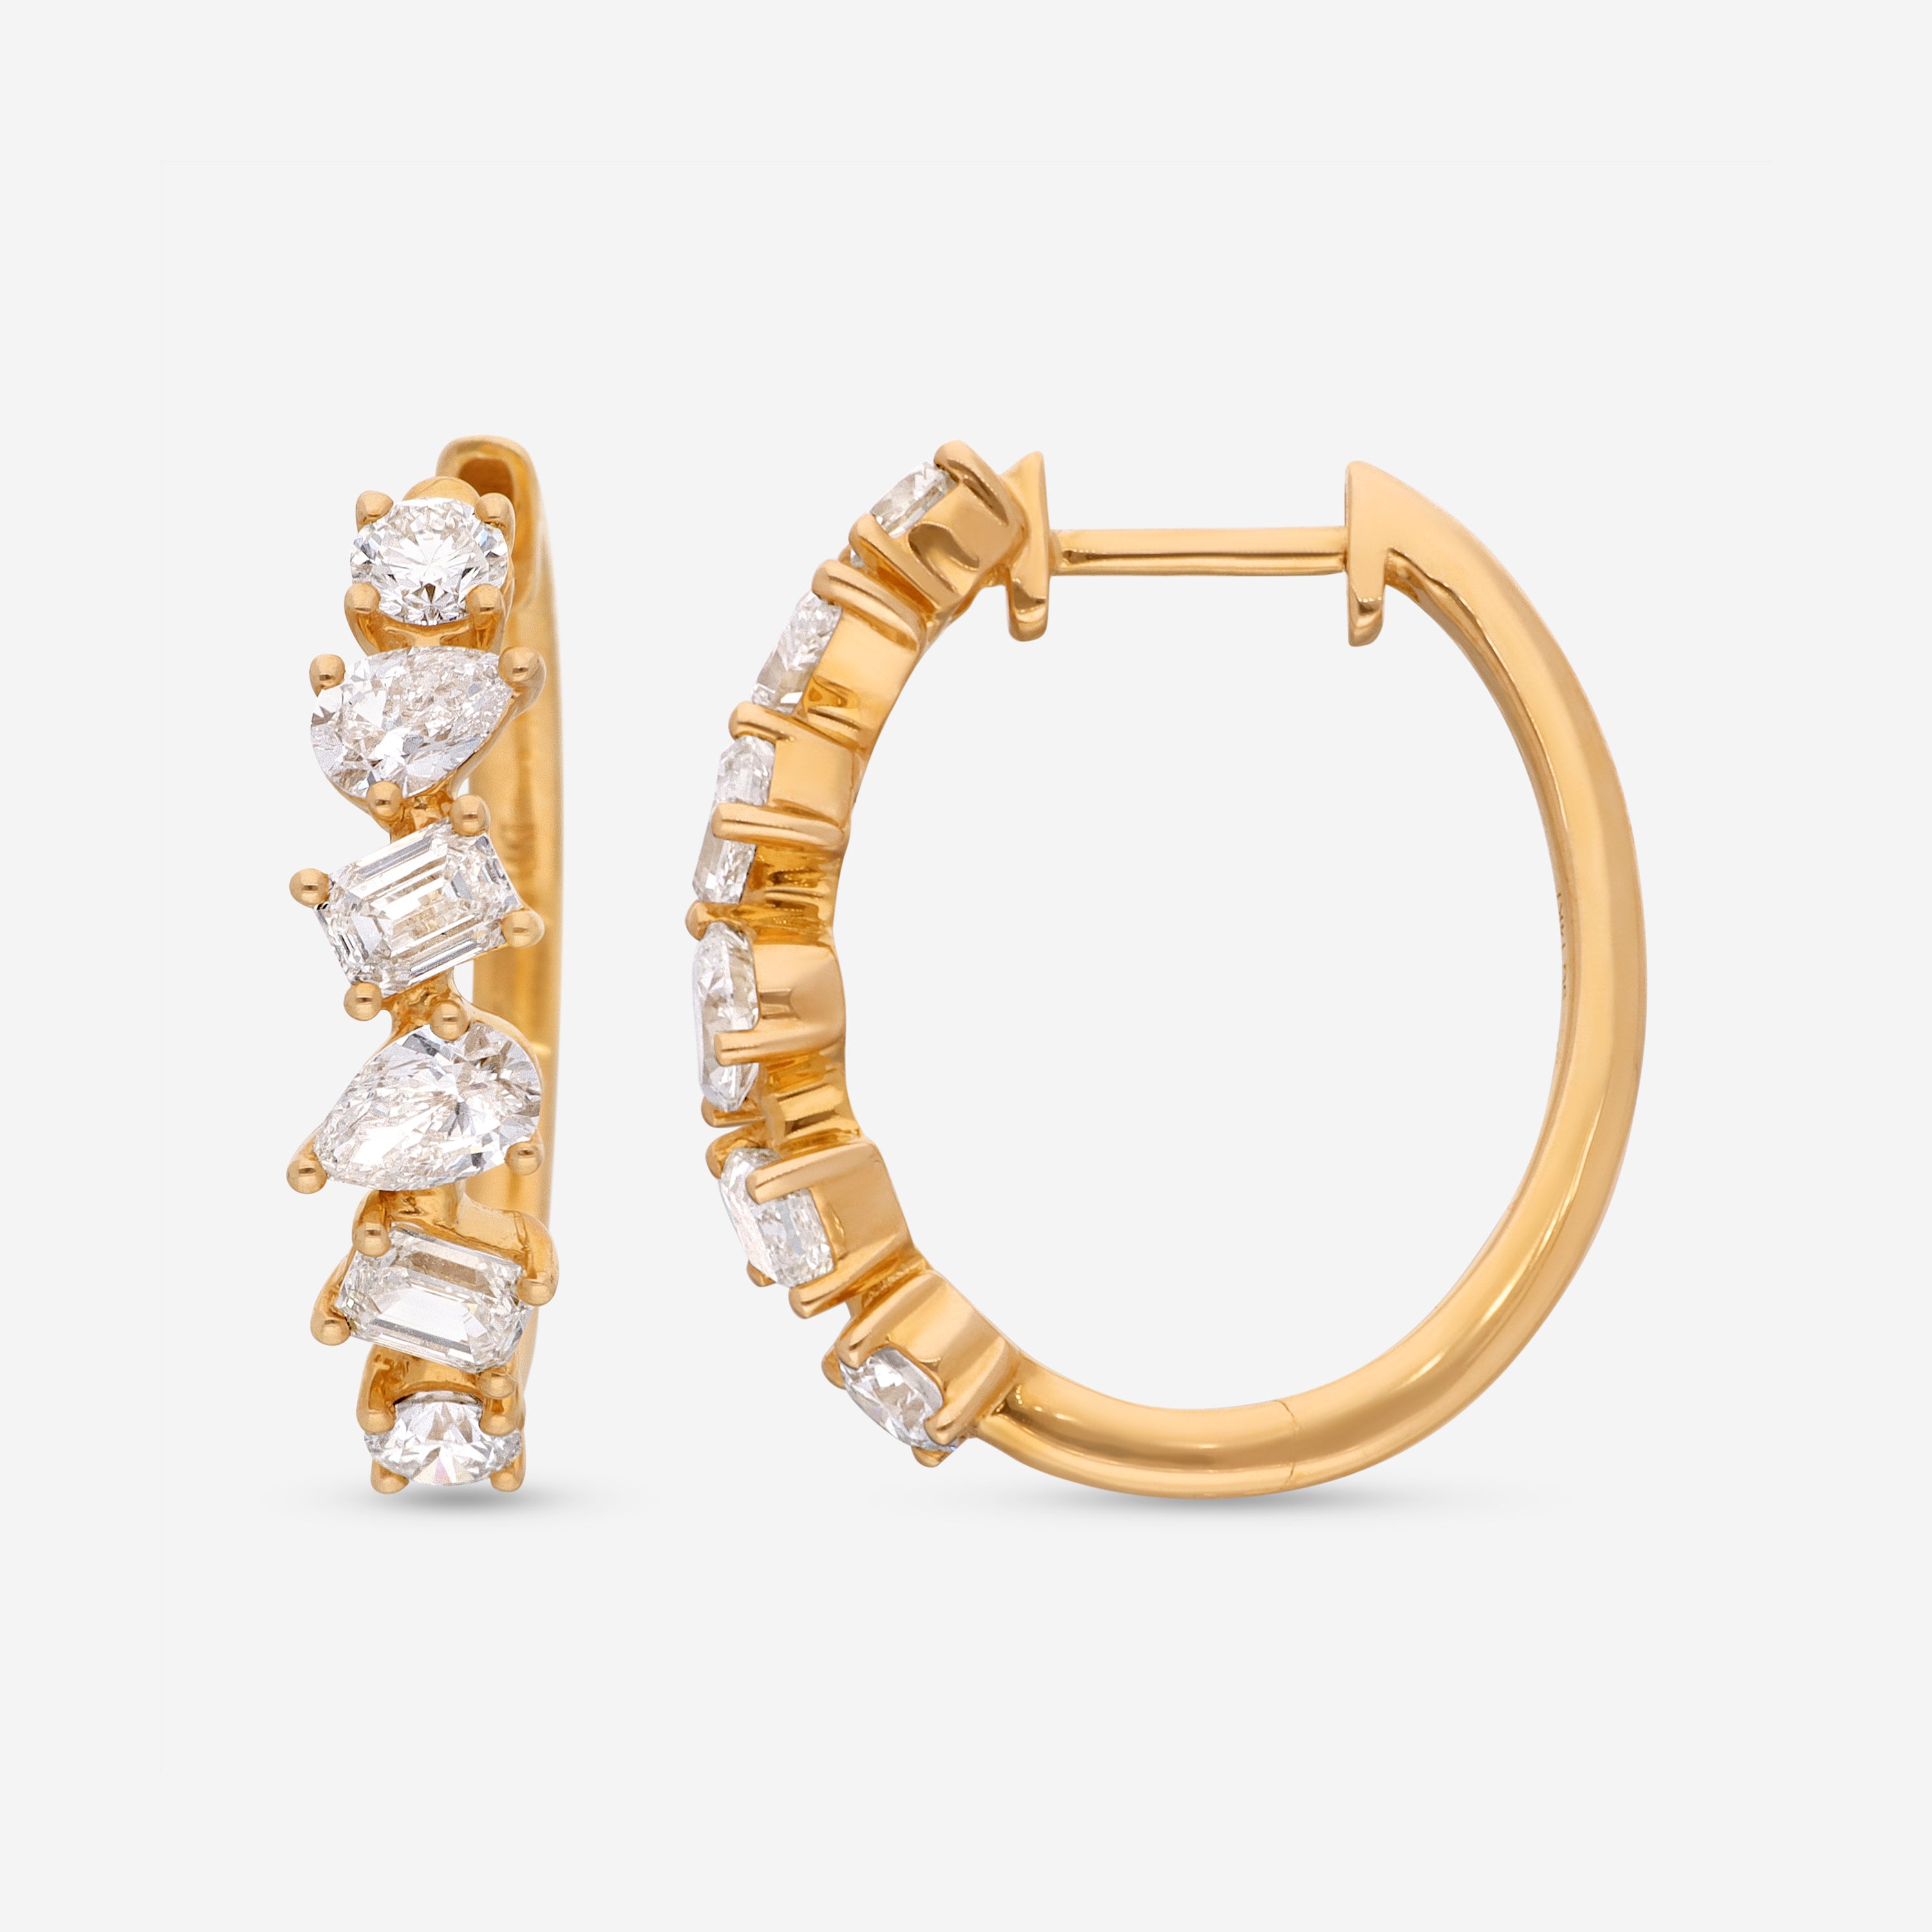 Ina Mar 14K Yellow Gold, Diamonds 2.32ct. twd. Small Hoop Earrings CN/566741